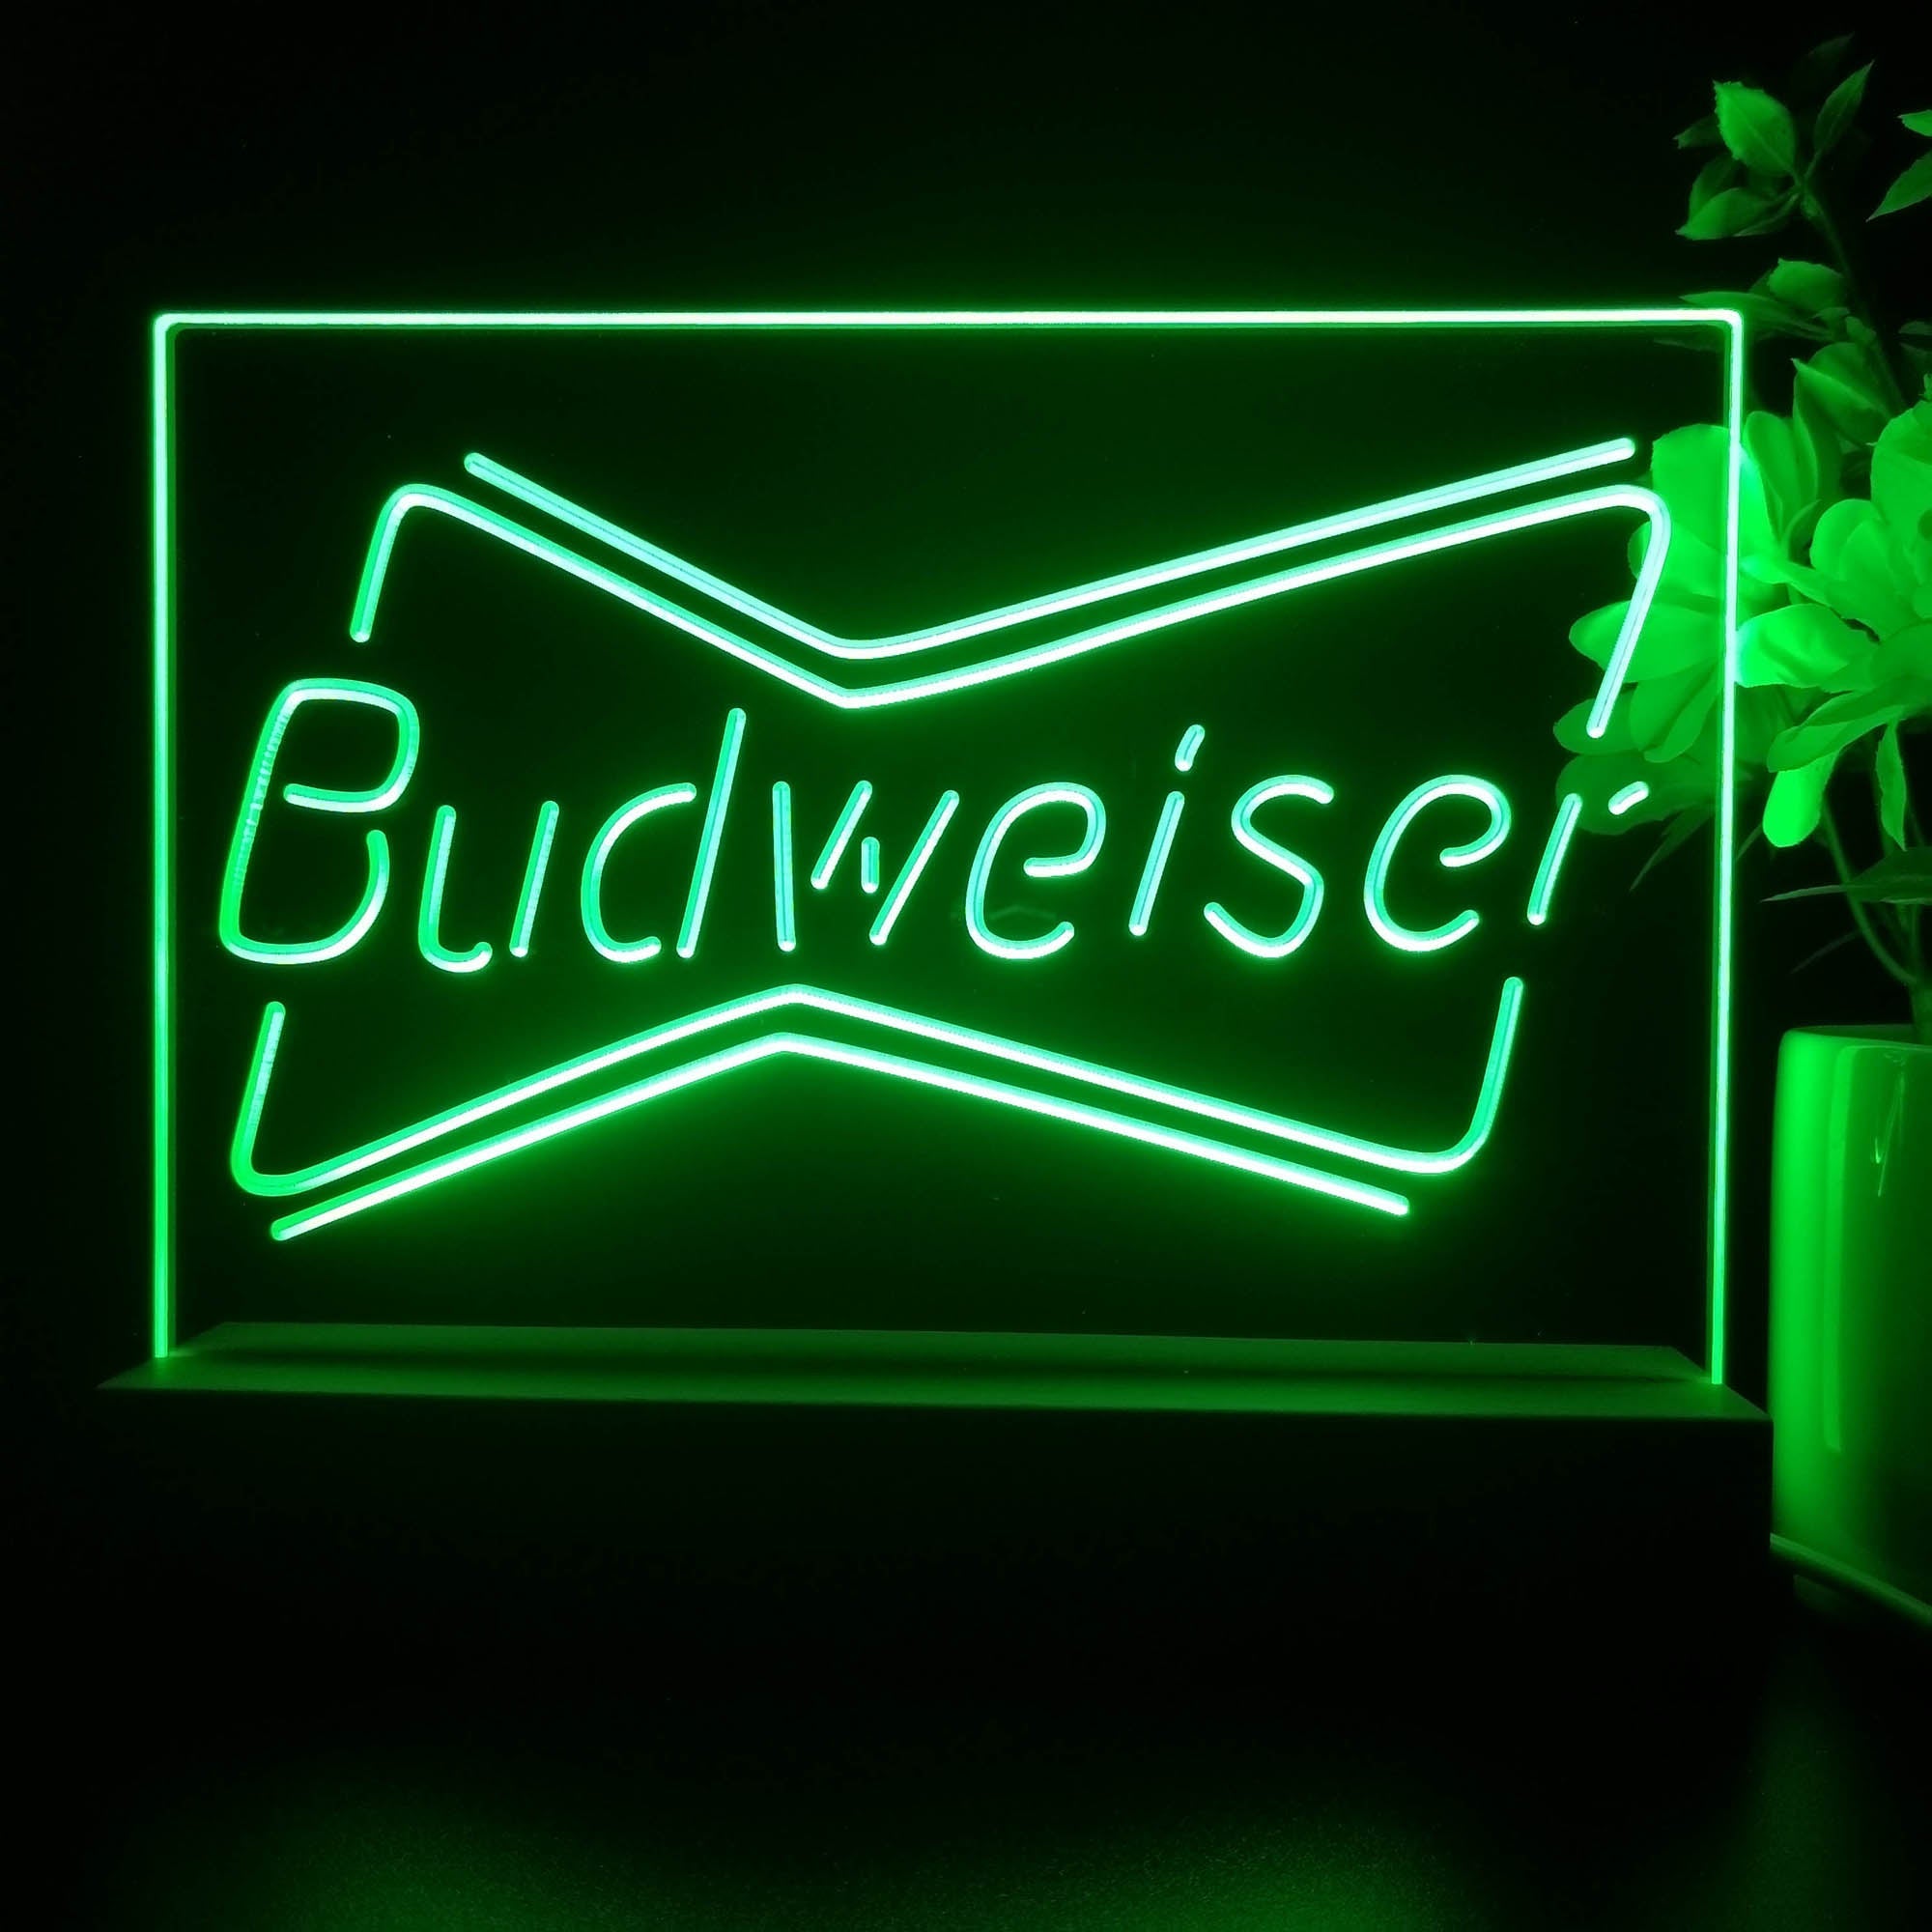 Budweiser Double Neon Sign Pub Bar Decor Lamp